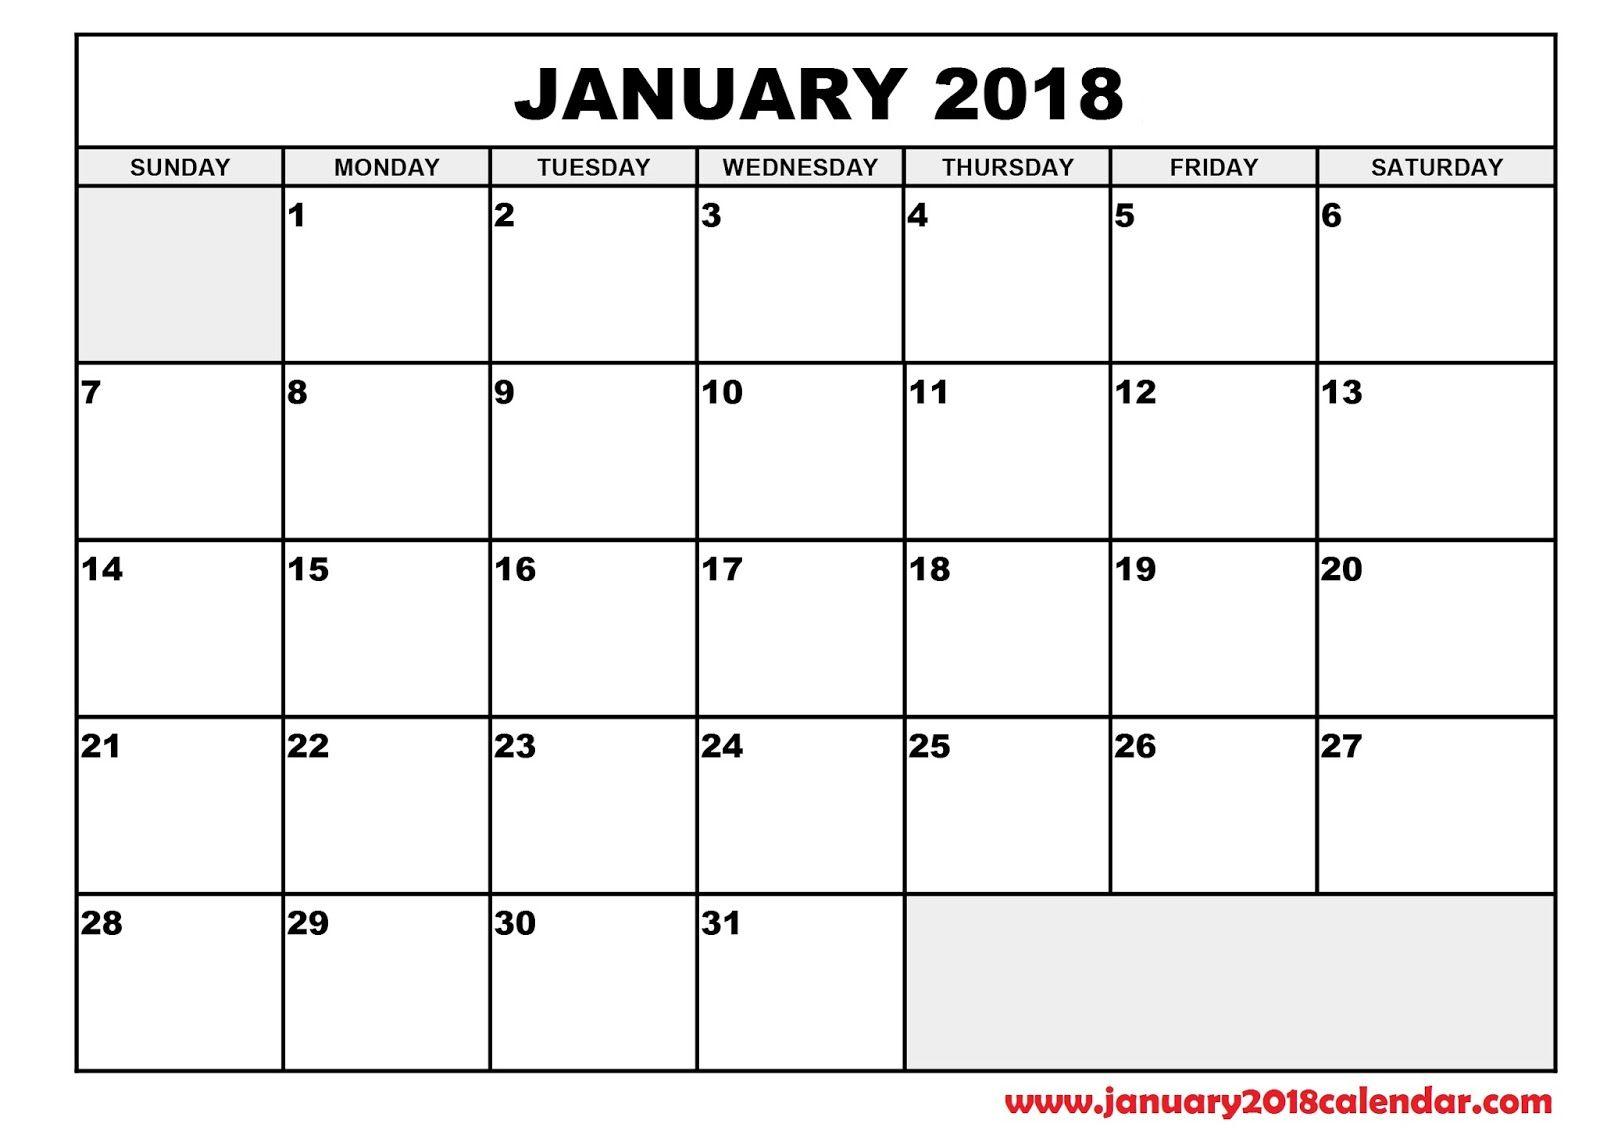 January 2018 calendar Image. HD World Wallpaper